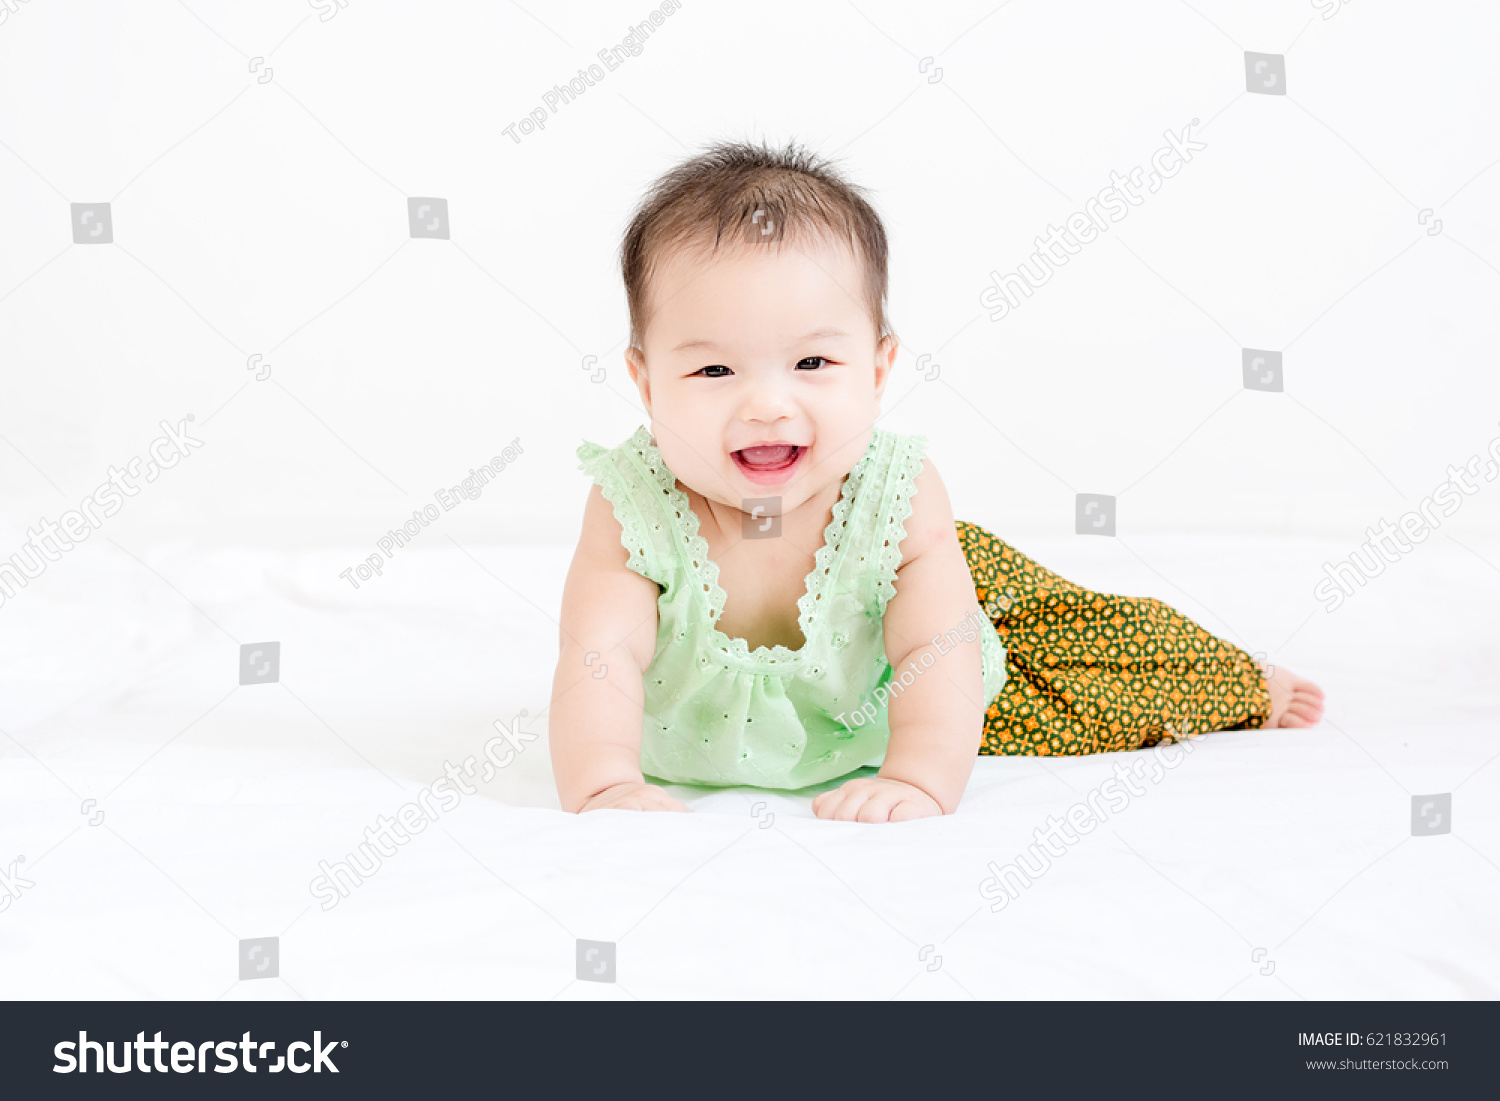 Portrait Little Adorable Infant Baby Girl Stock Photo 621832961 ...